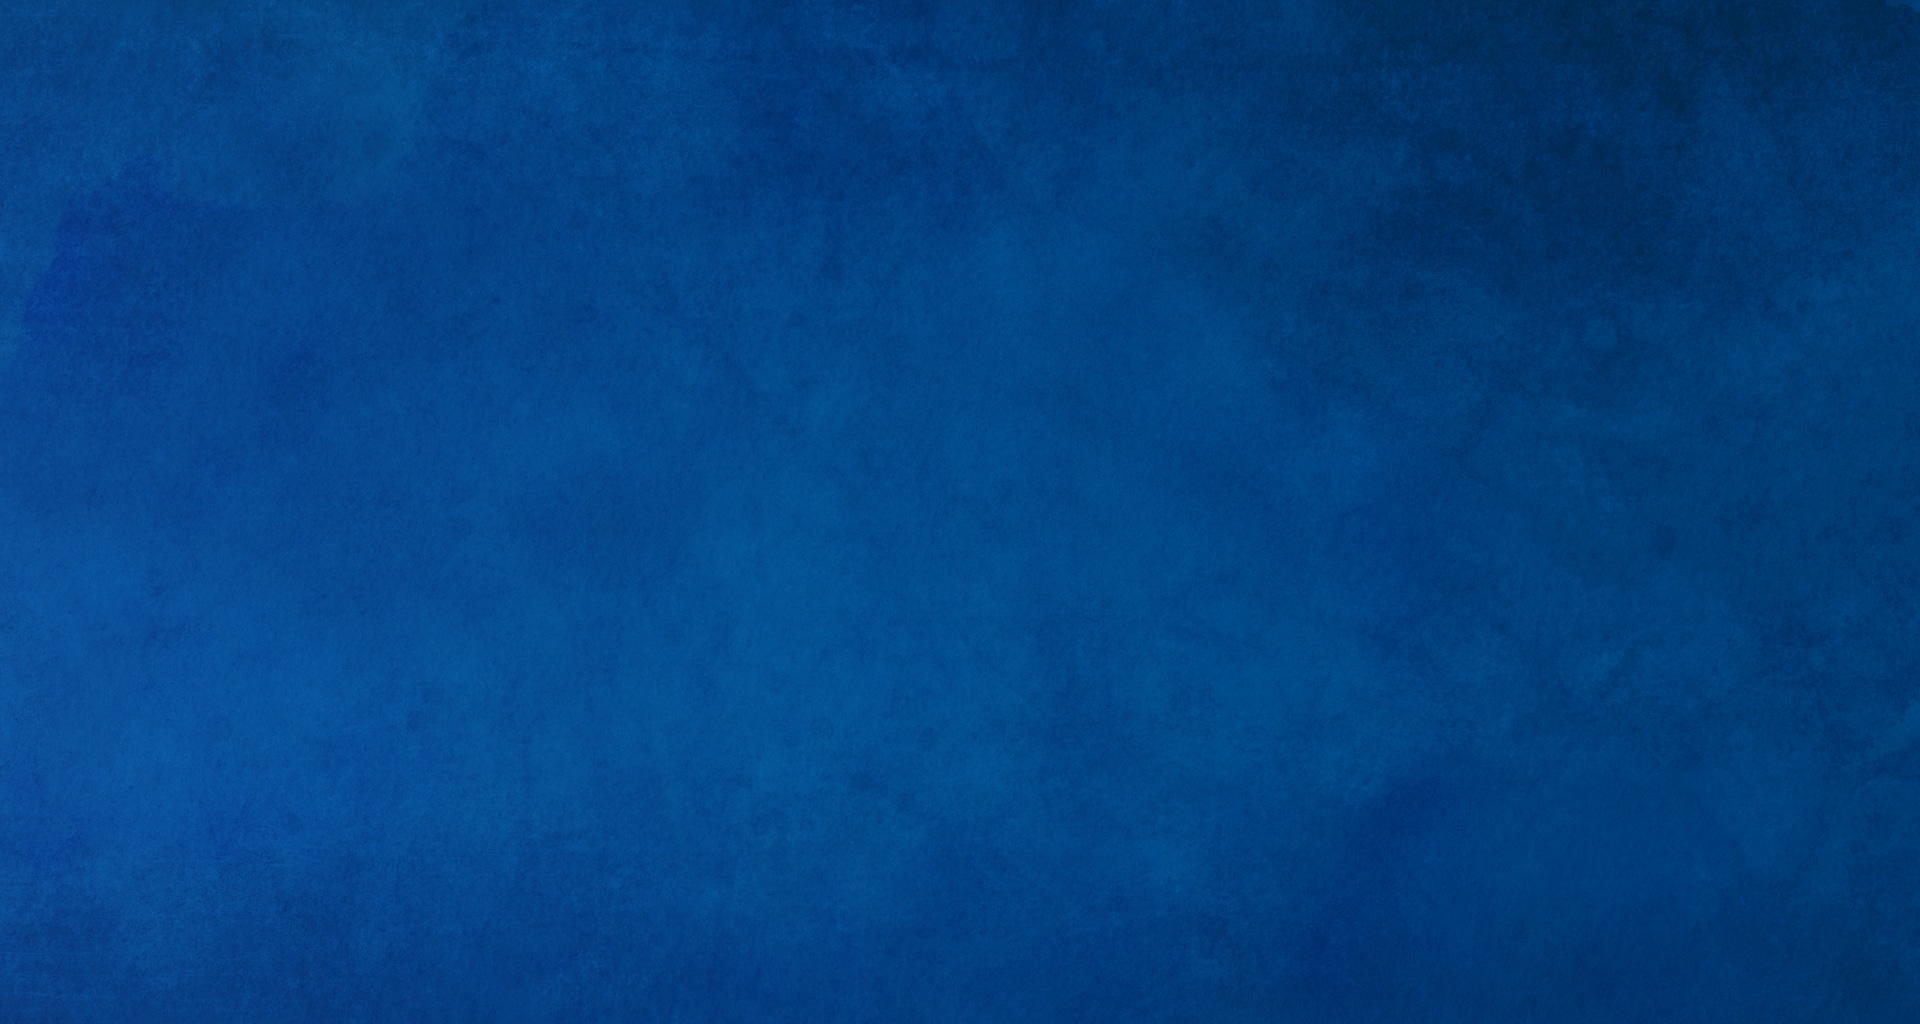 Home Banner Background - Blue